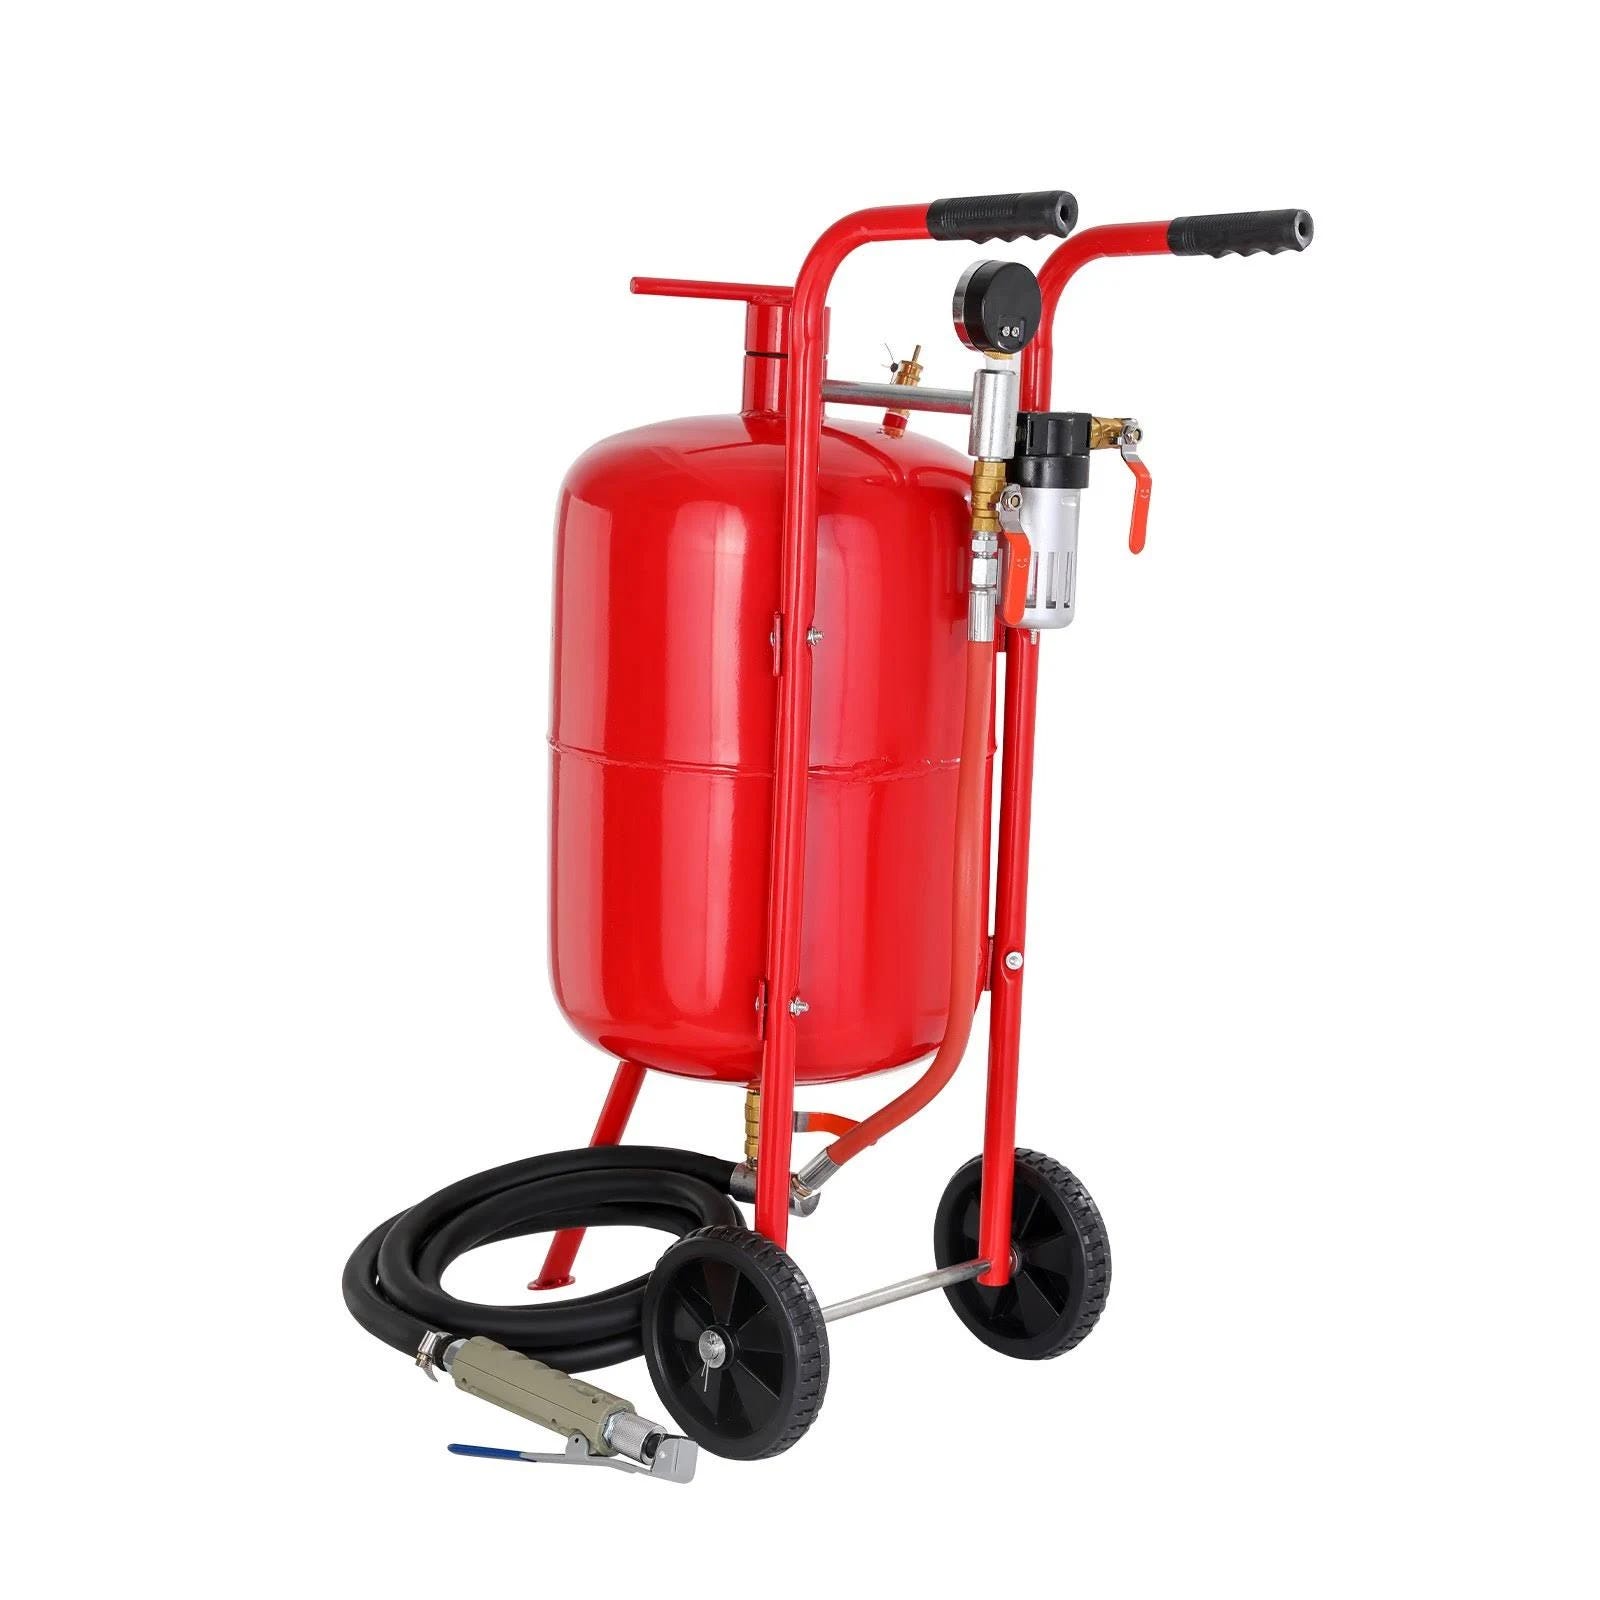 VEFOR 10 Gallon Portable Air Sandblaster | Image